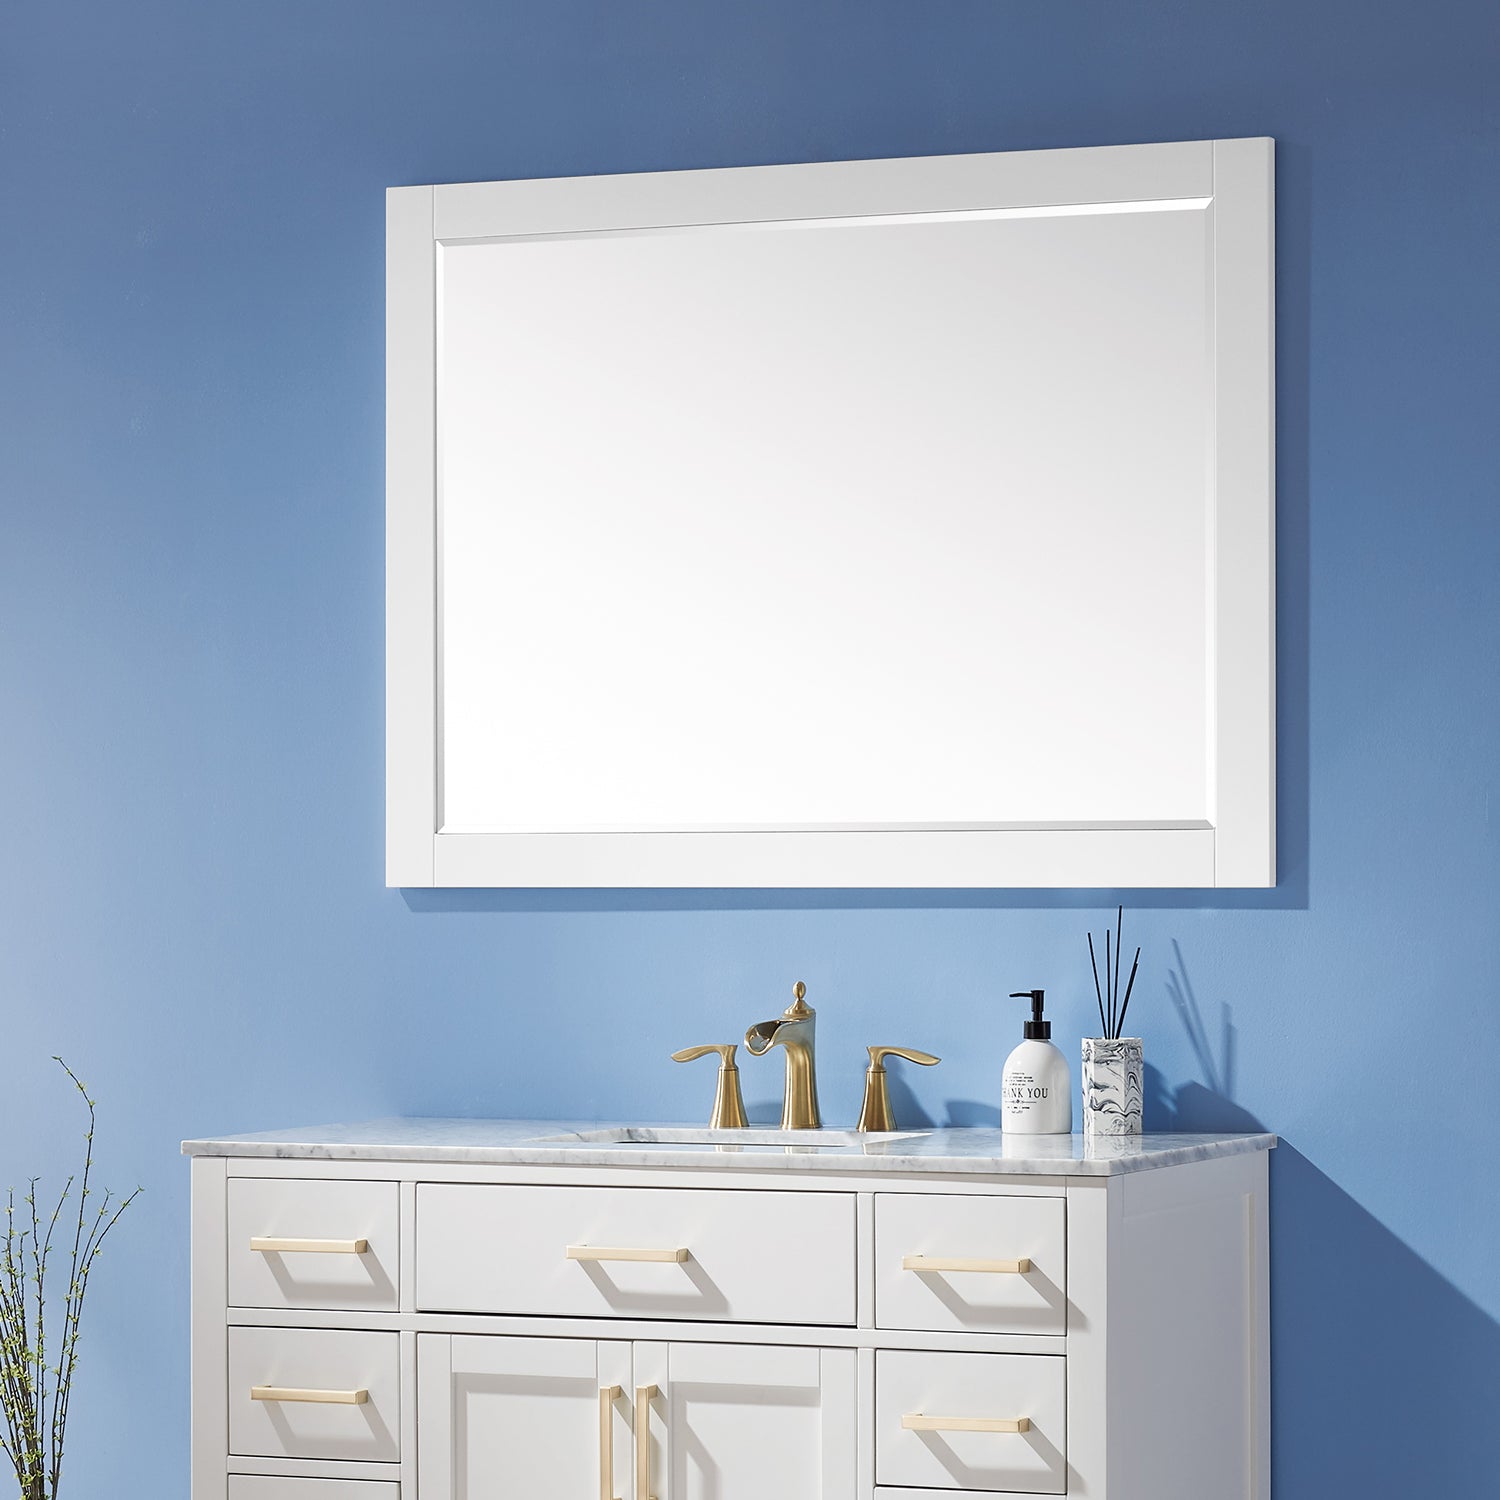 Ivy 48" Rectangular Bathroom Wood Framed Wall Mirror